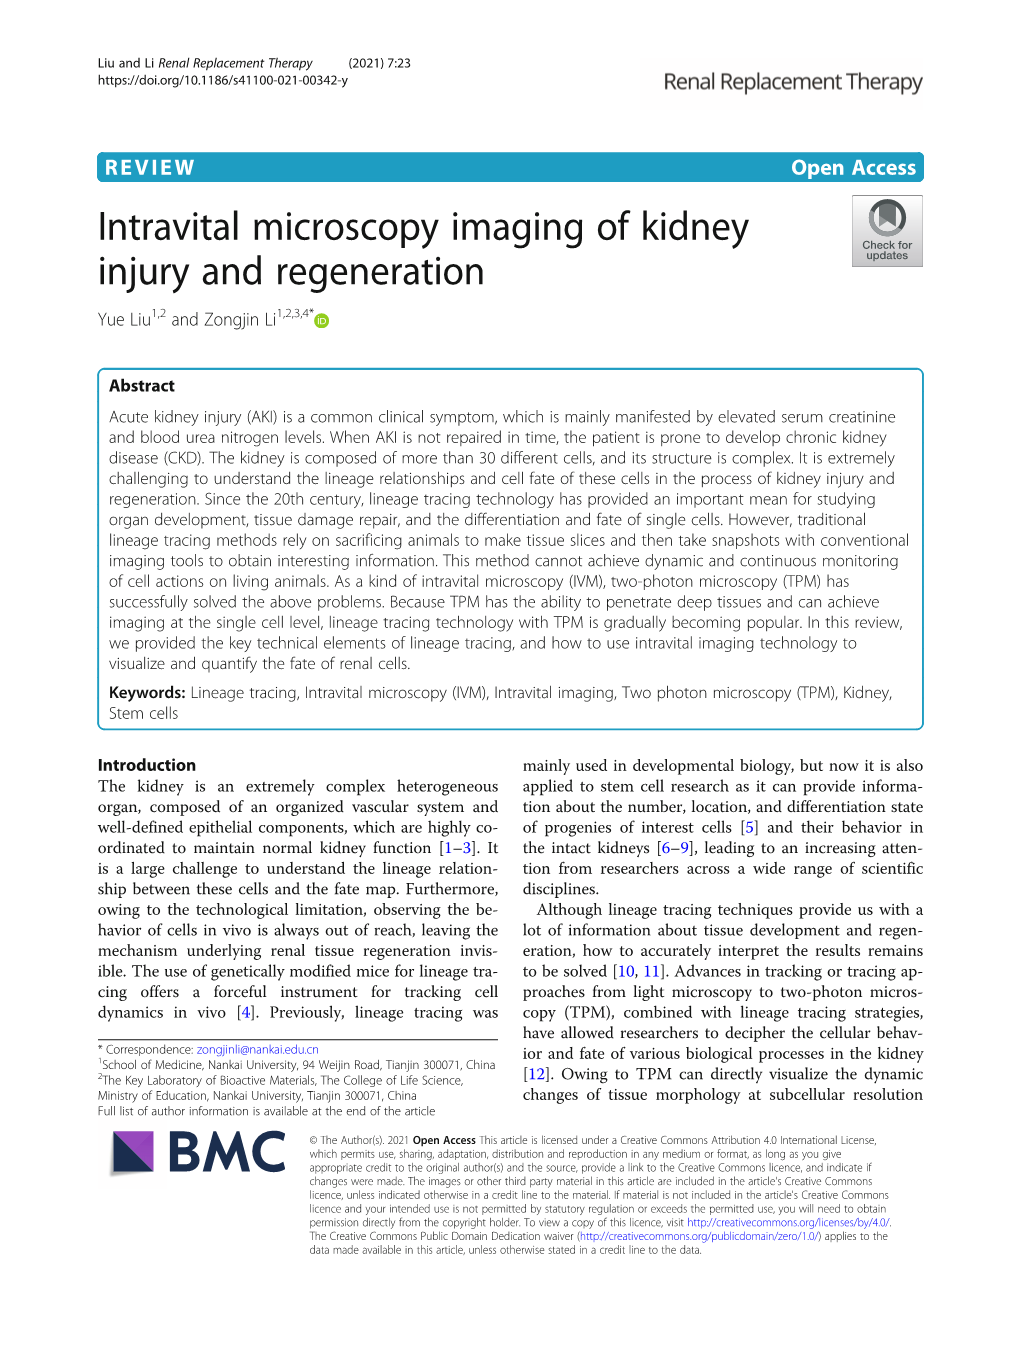 Intravital Microscopy Imaging of Kidney Injury and Regeneration Yue Liu1,2 and Zongjin Li1,2,3,4*